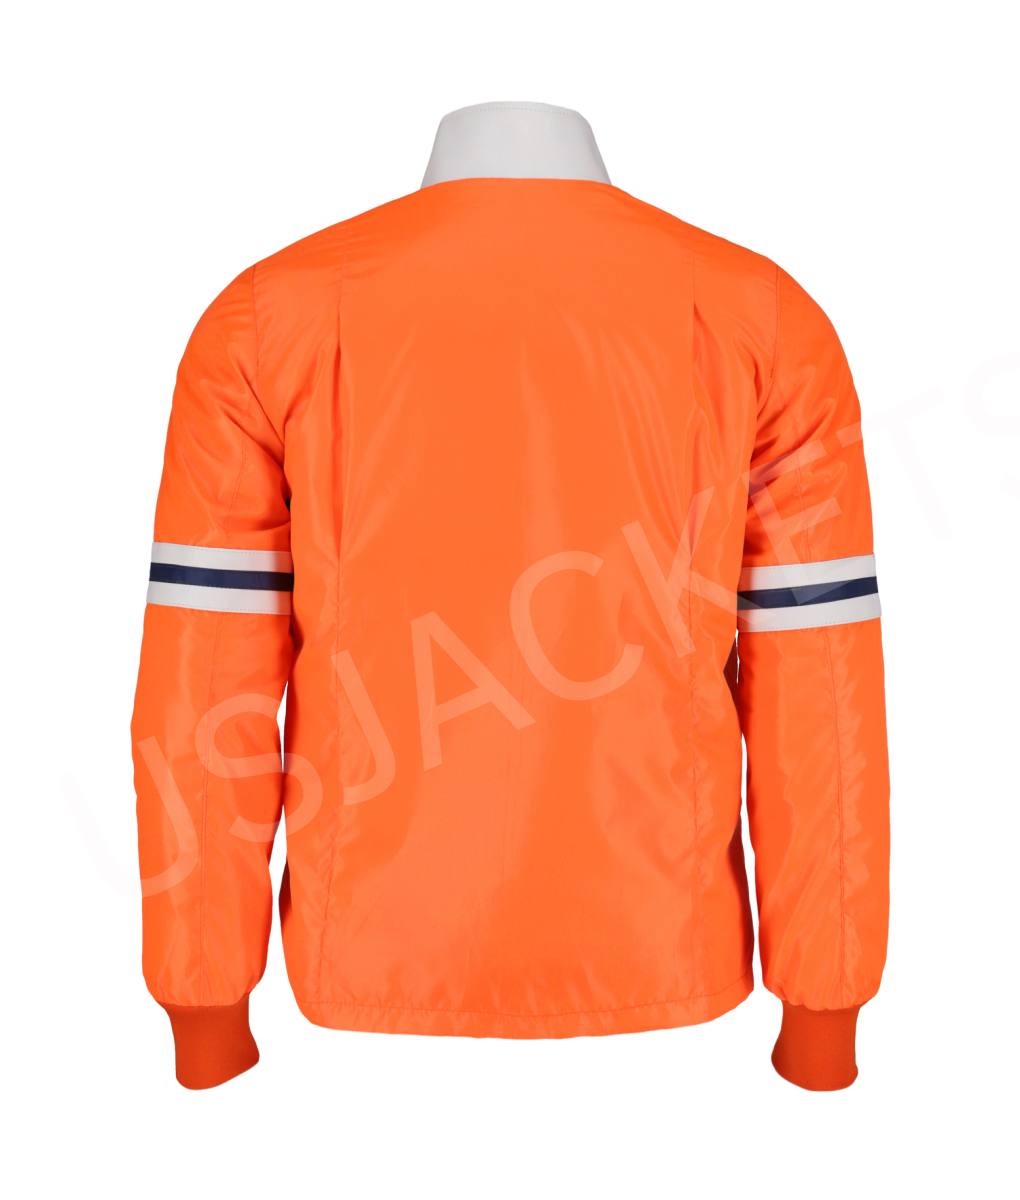 J. J. McClure Orange Jacket3